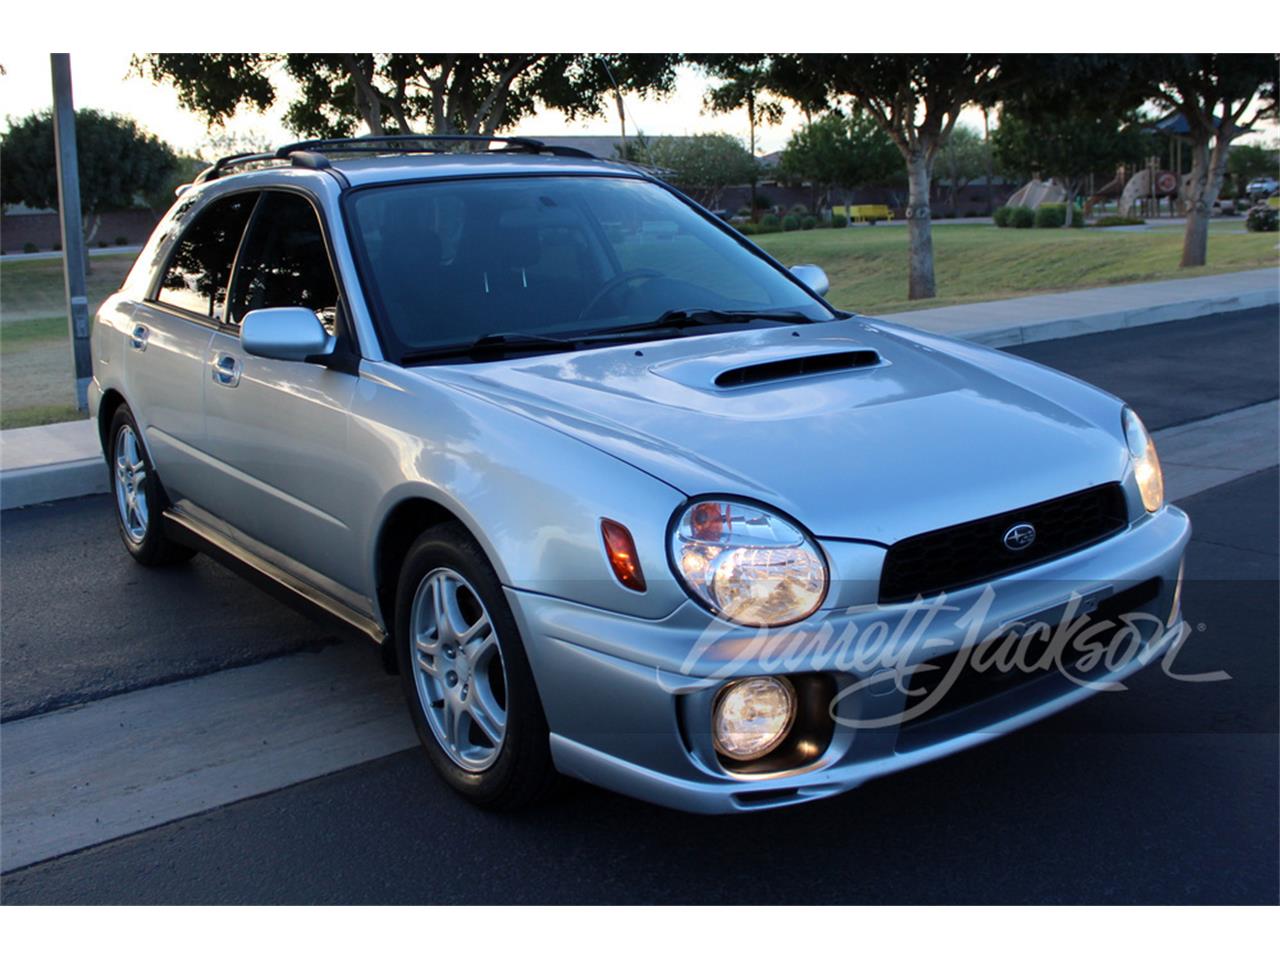 For Sale at Auction: 2003 Subaru Impreza in Scottsdale, Arizona for sale in Scottsdale, AZ